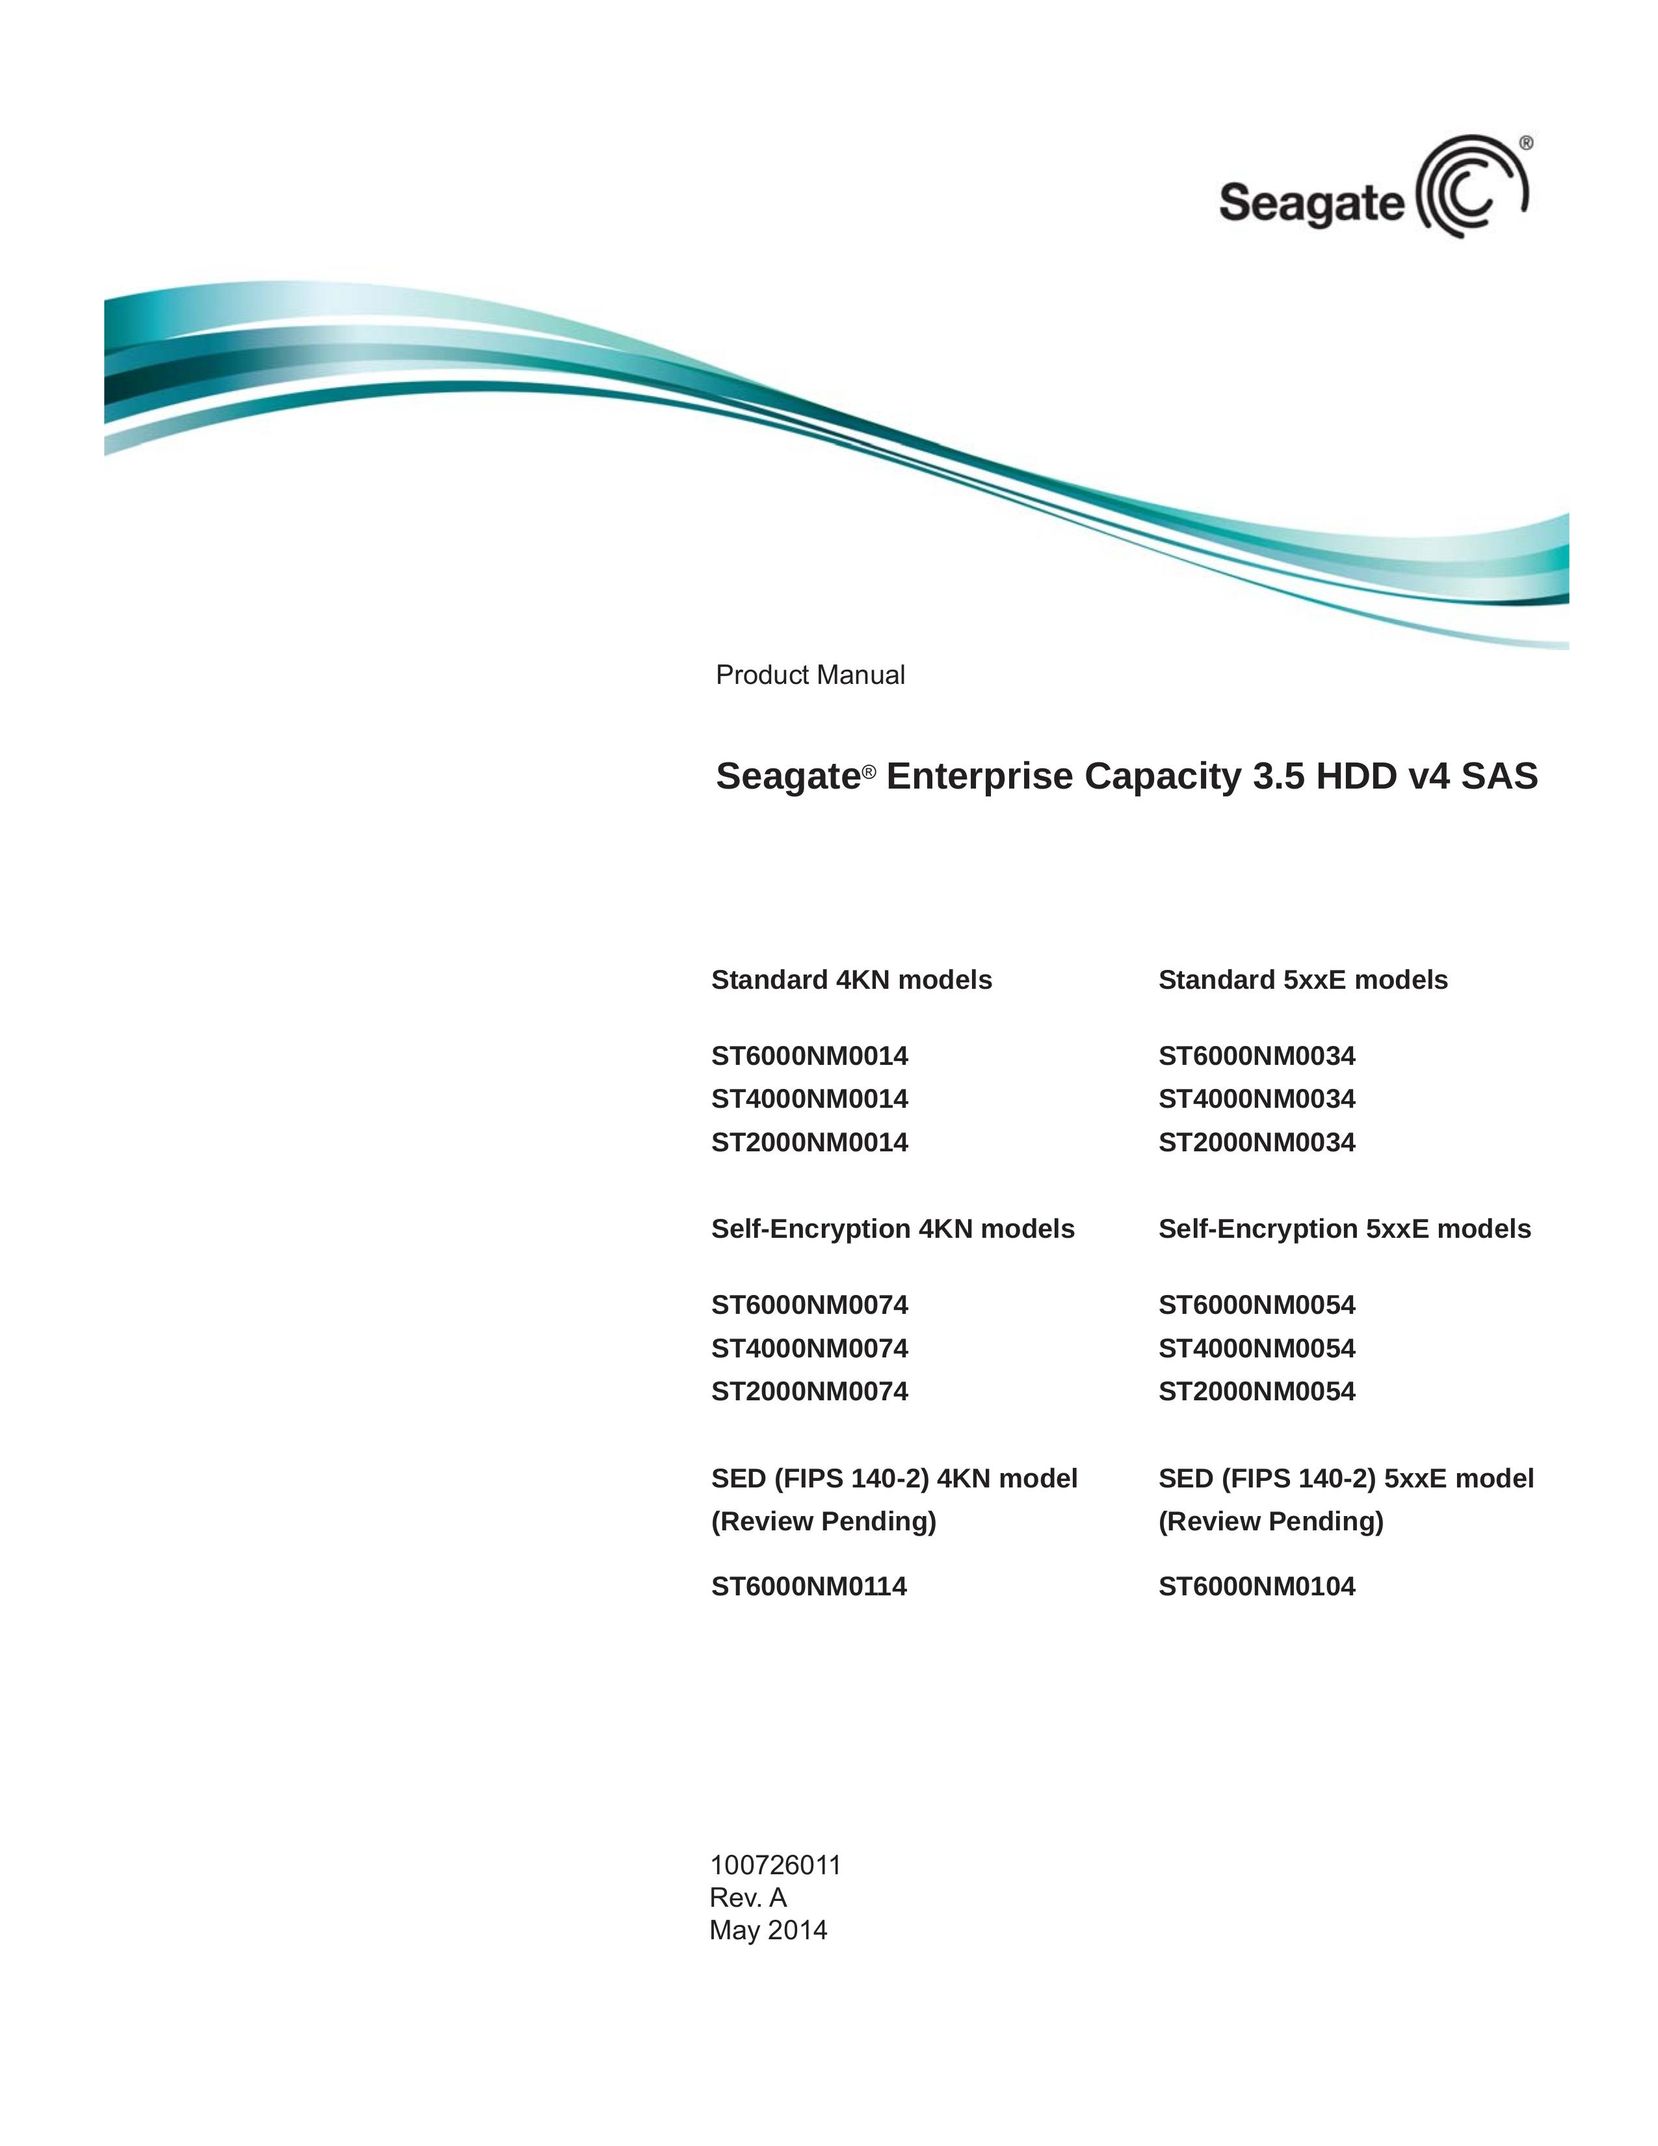 Seagate ST6000NM0104 Laptop User Manual